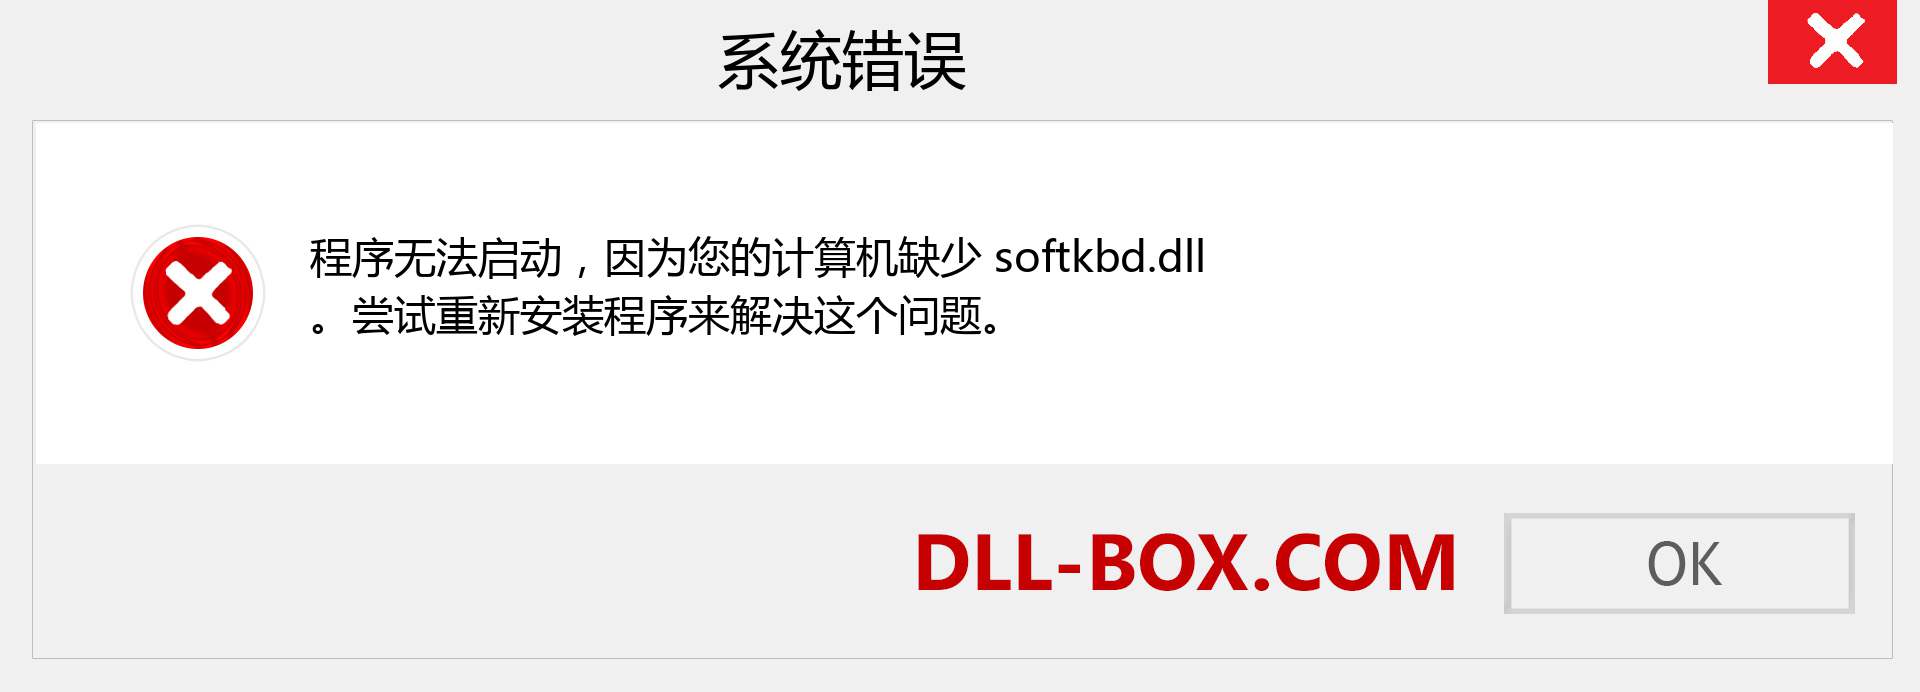 softkbd.dll 文件丢失？。 适用于 Windows 7、8、10 的下载 - 修复 Windows、照片、图像上的 softkbd dll 丢失错误